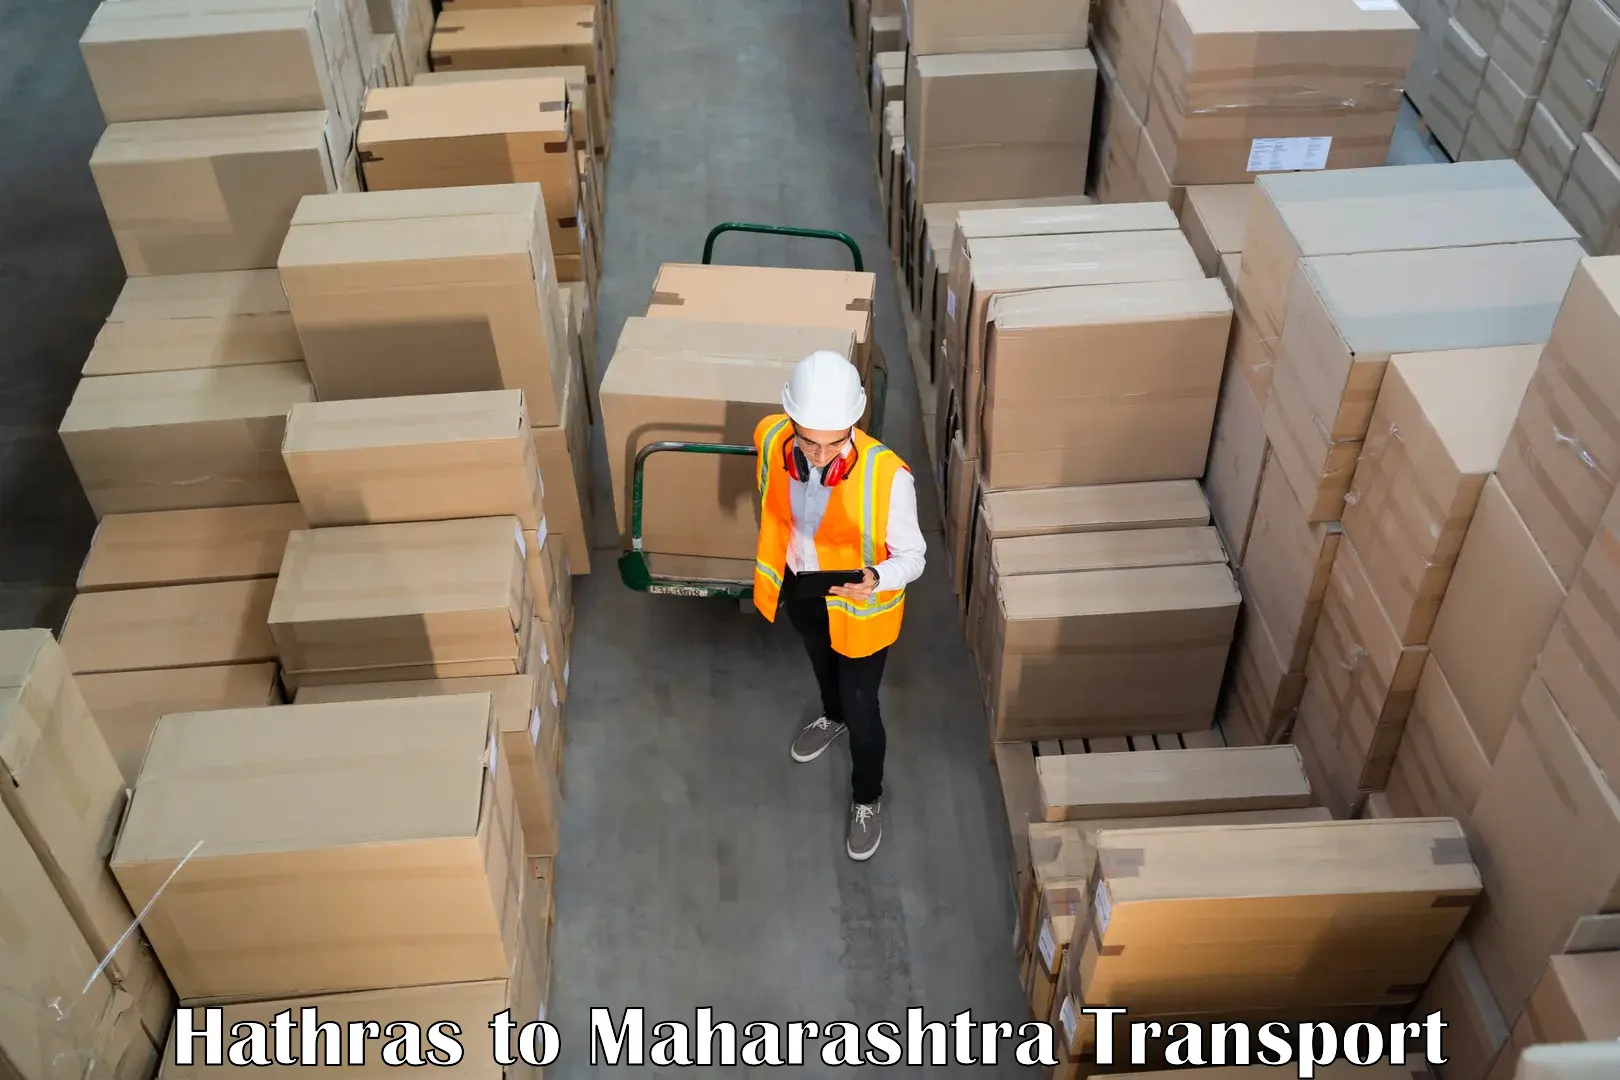 Goods delivery service Hathras to Walchandnagar